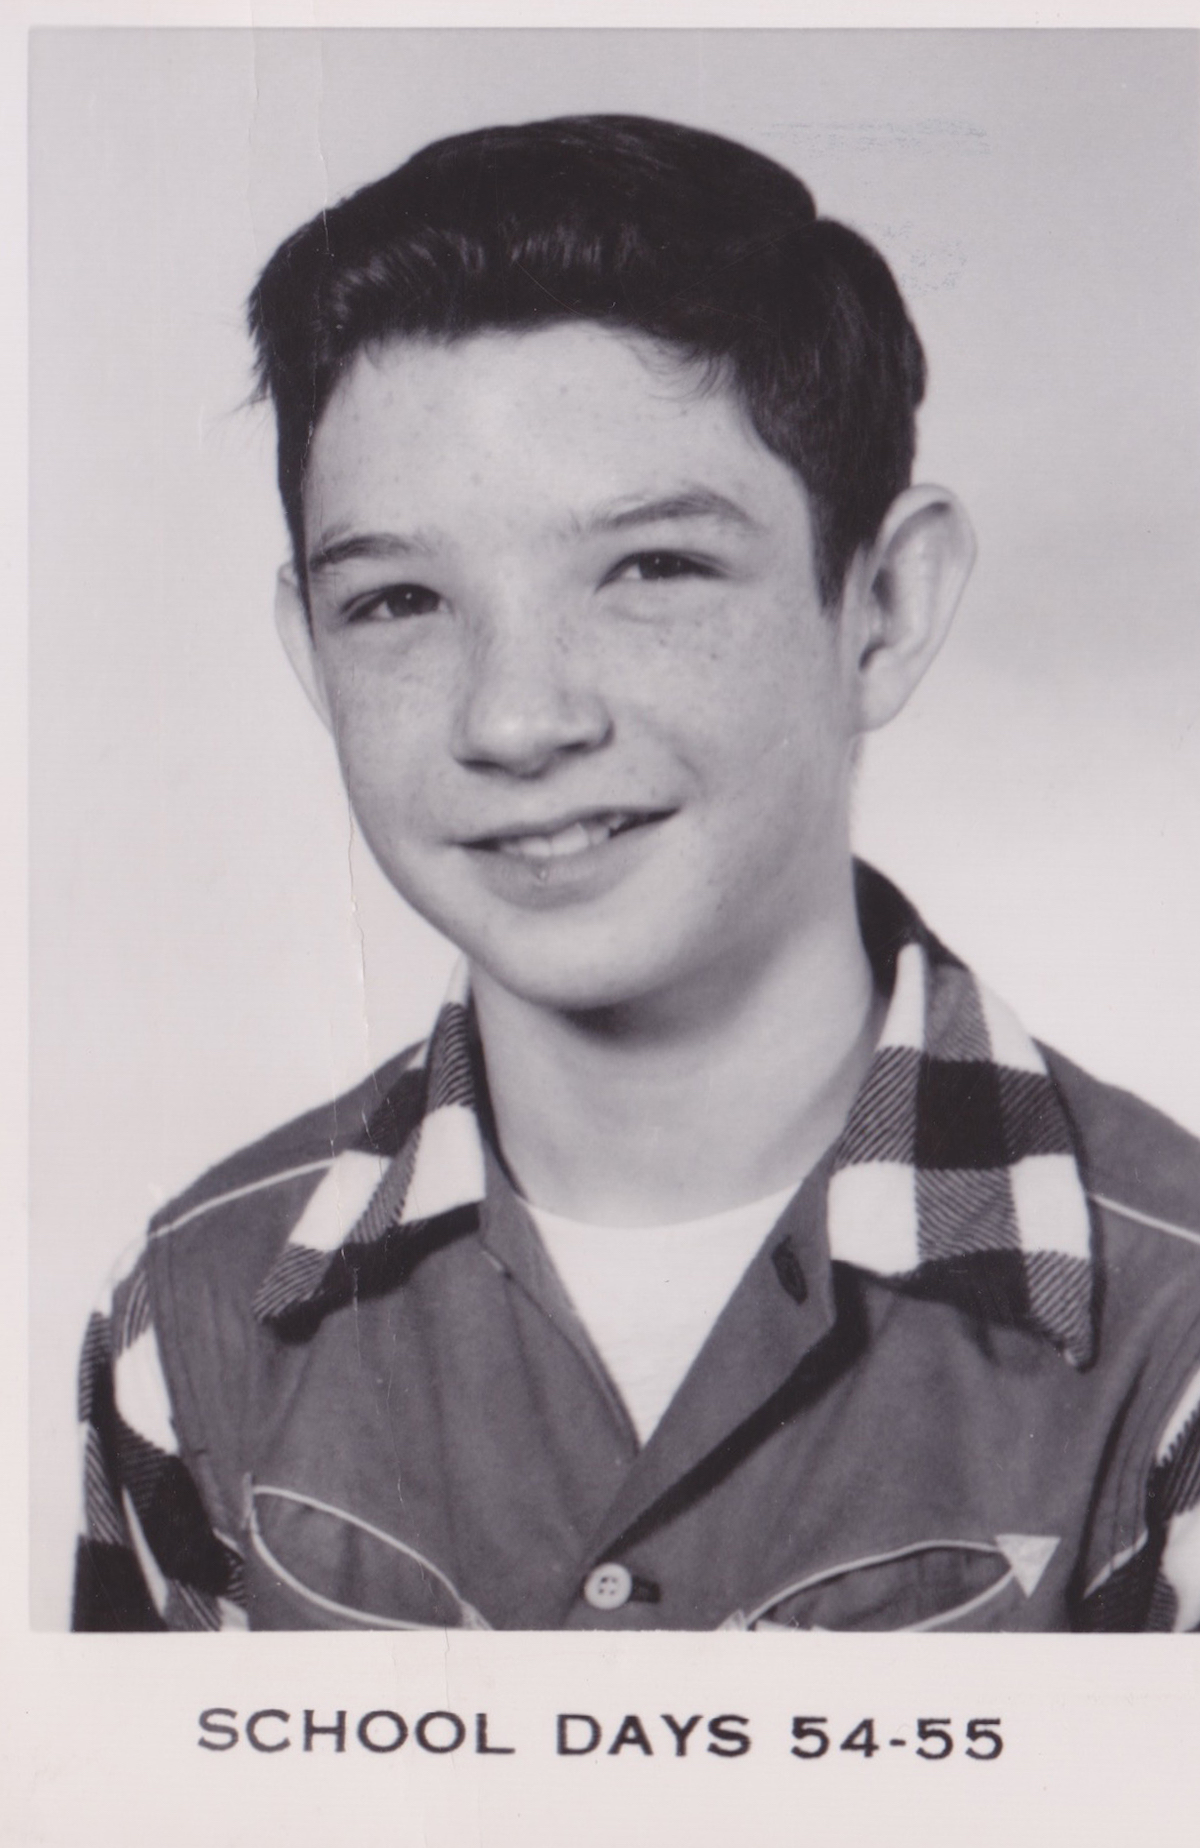 Don Quaintance at age 13, 1954-55. Photo courtesy of Don Quaintance. 